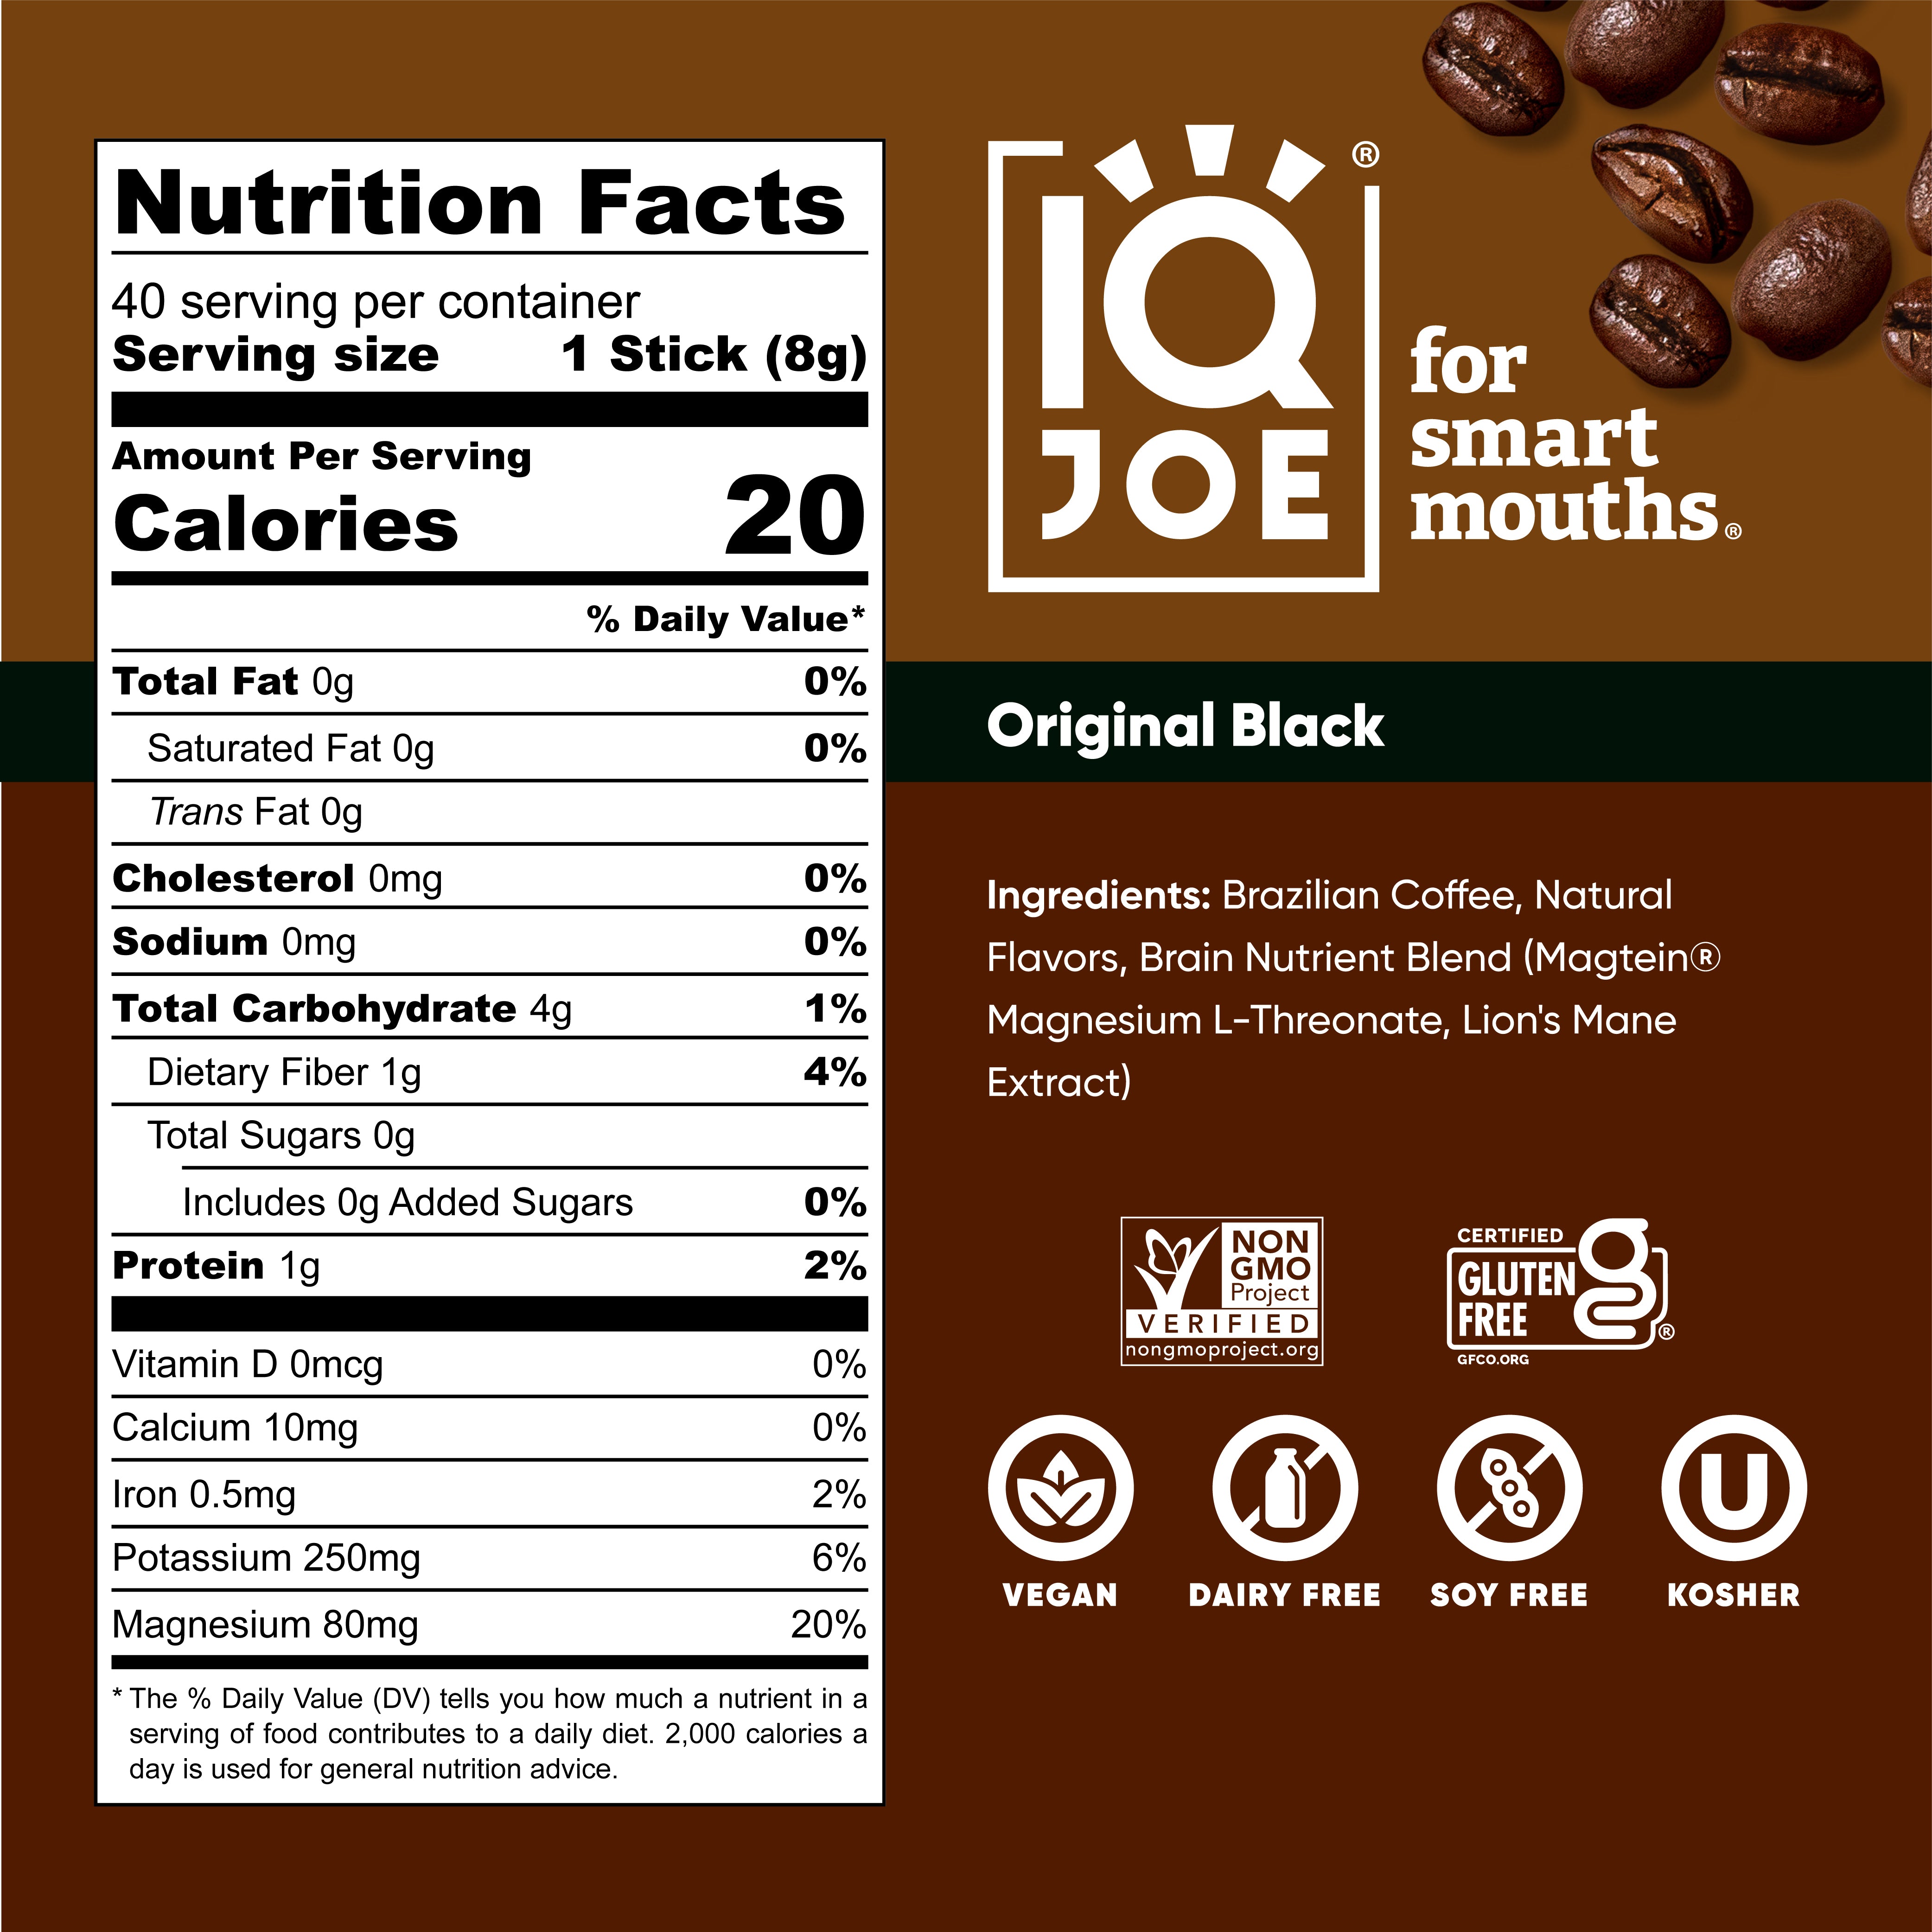 IQJOE Original Black Nutrition Facts. Vegan. Dairy Free, Soy Free, Kosher, zero sugar.